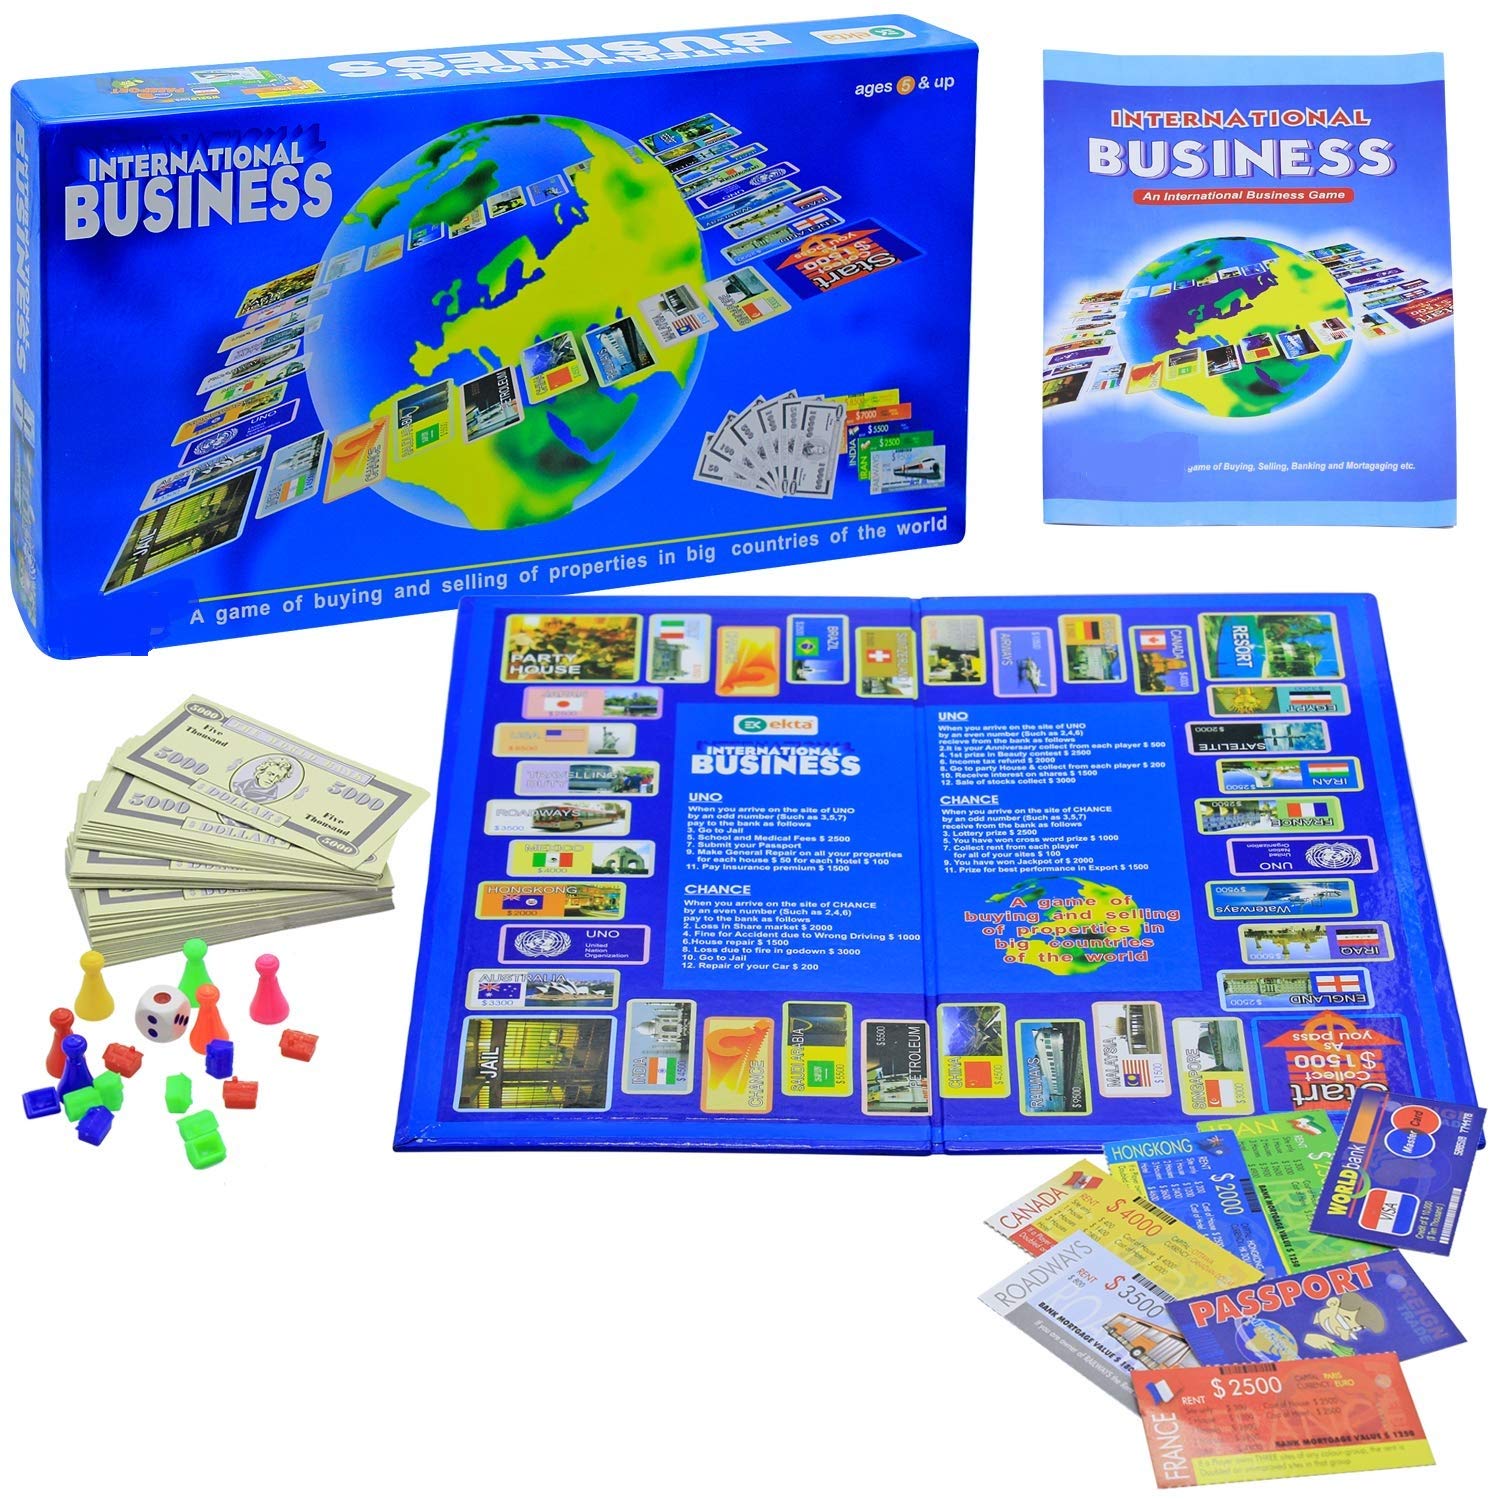 Rockjon International Business A Board Game. Kids Toys Games, Bonanza Game of Money